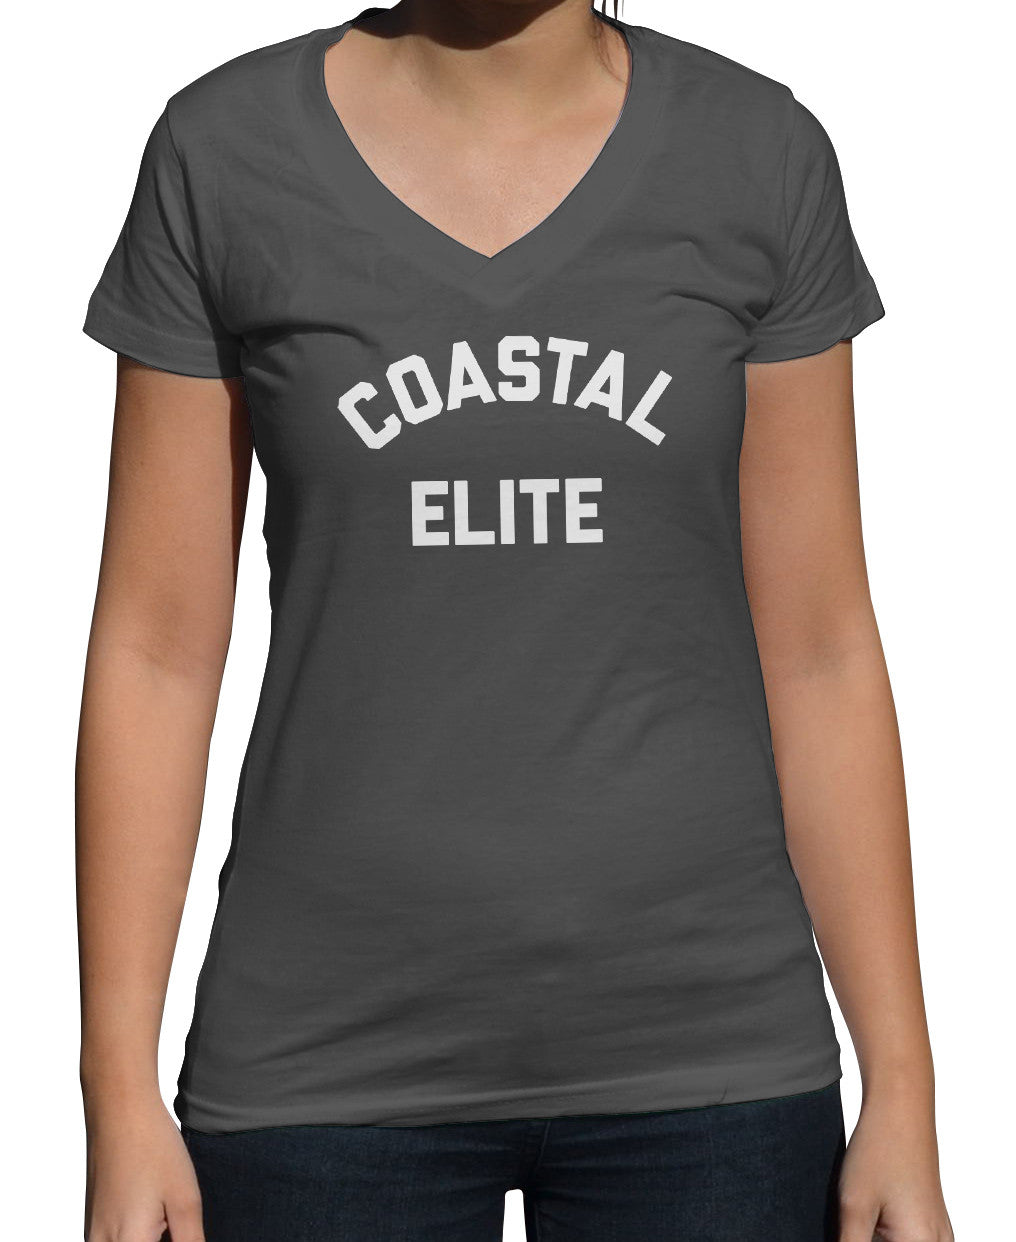 Women's Coastal Elite Vneck T-Shirt